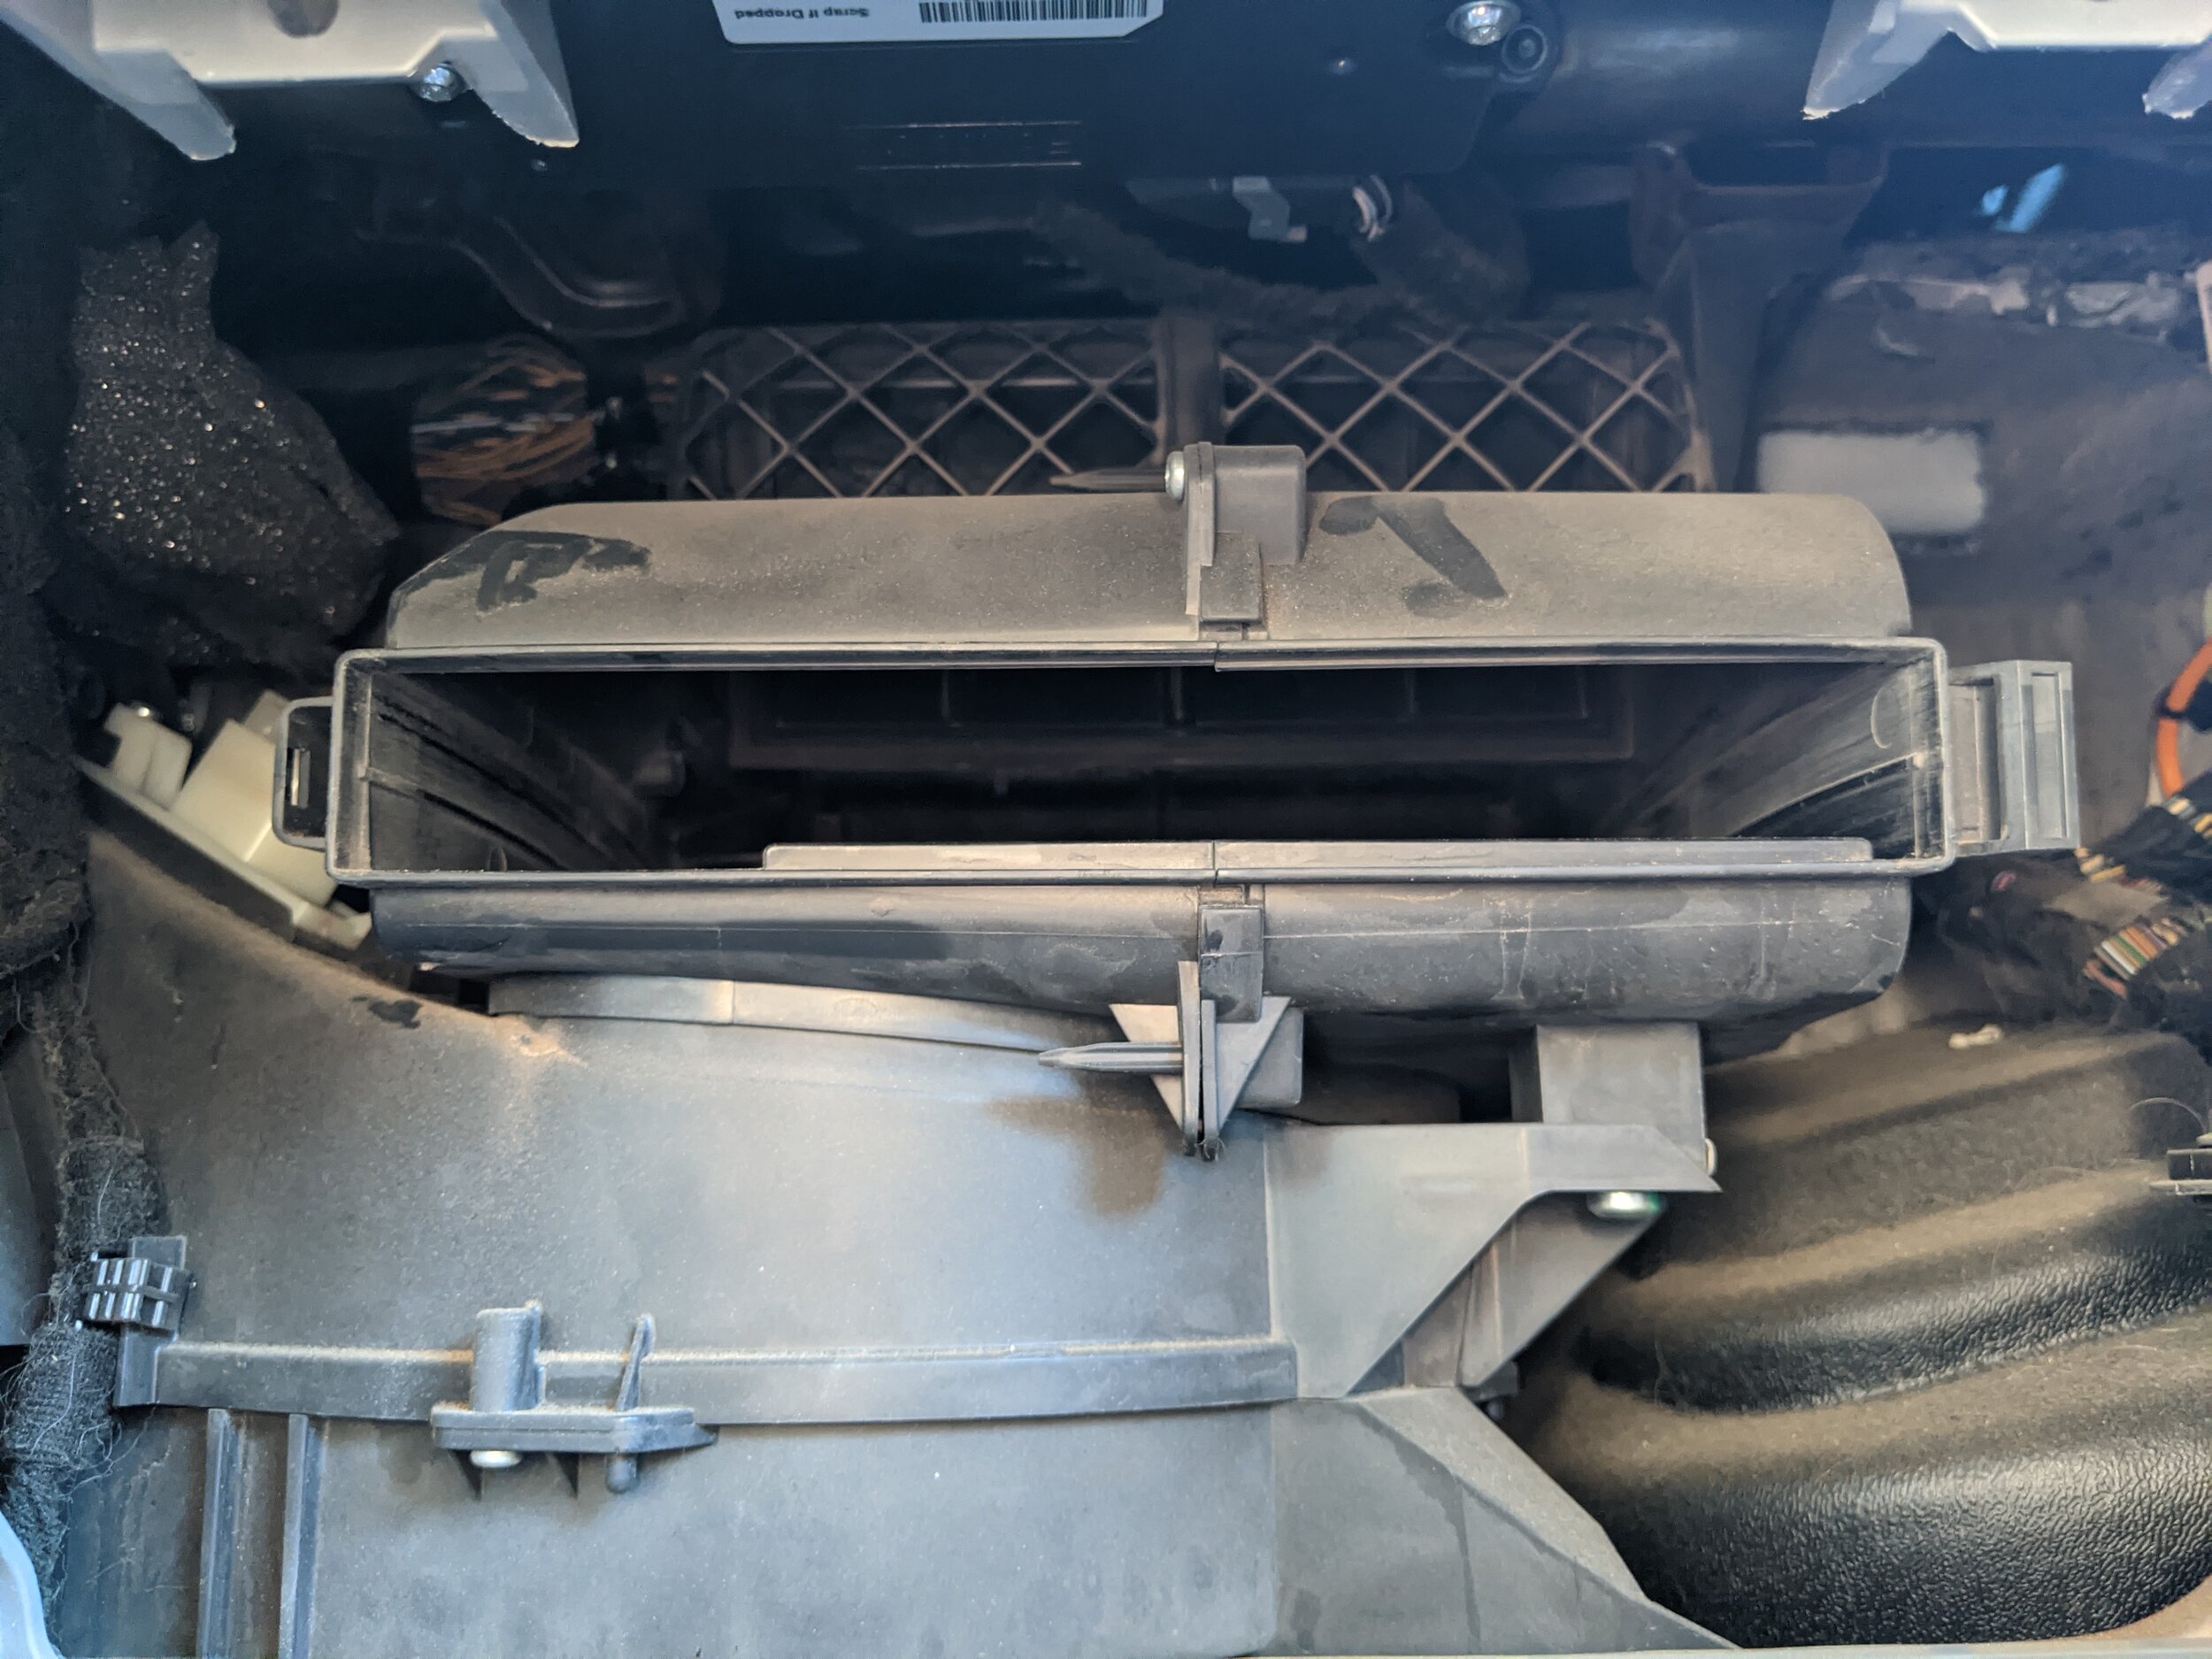 Ford Transit Van Conversion - Cabin Air Filter Install